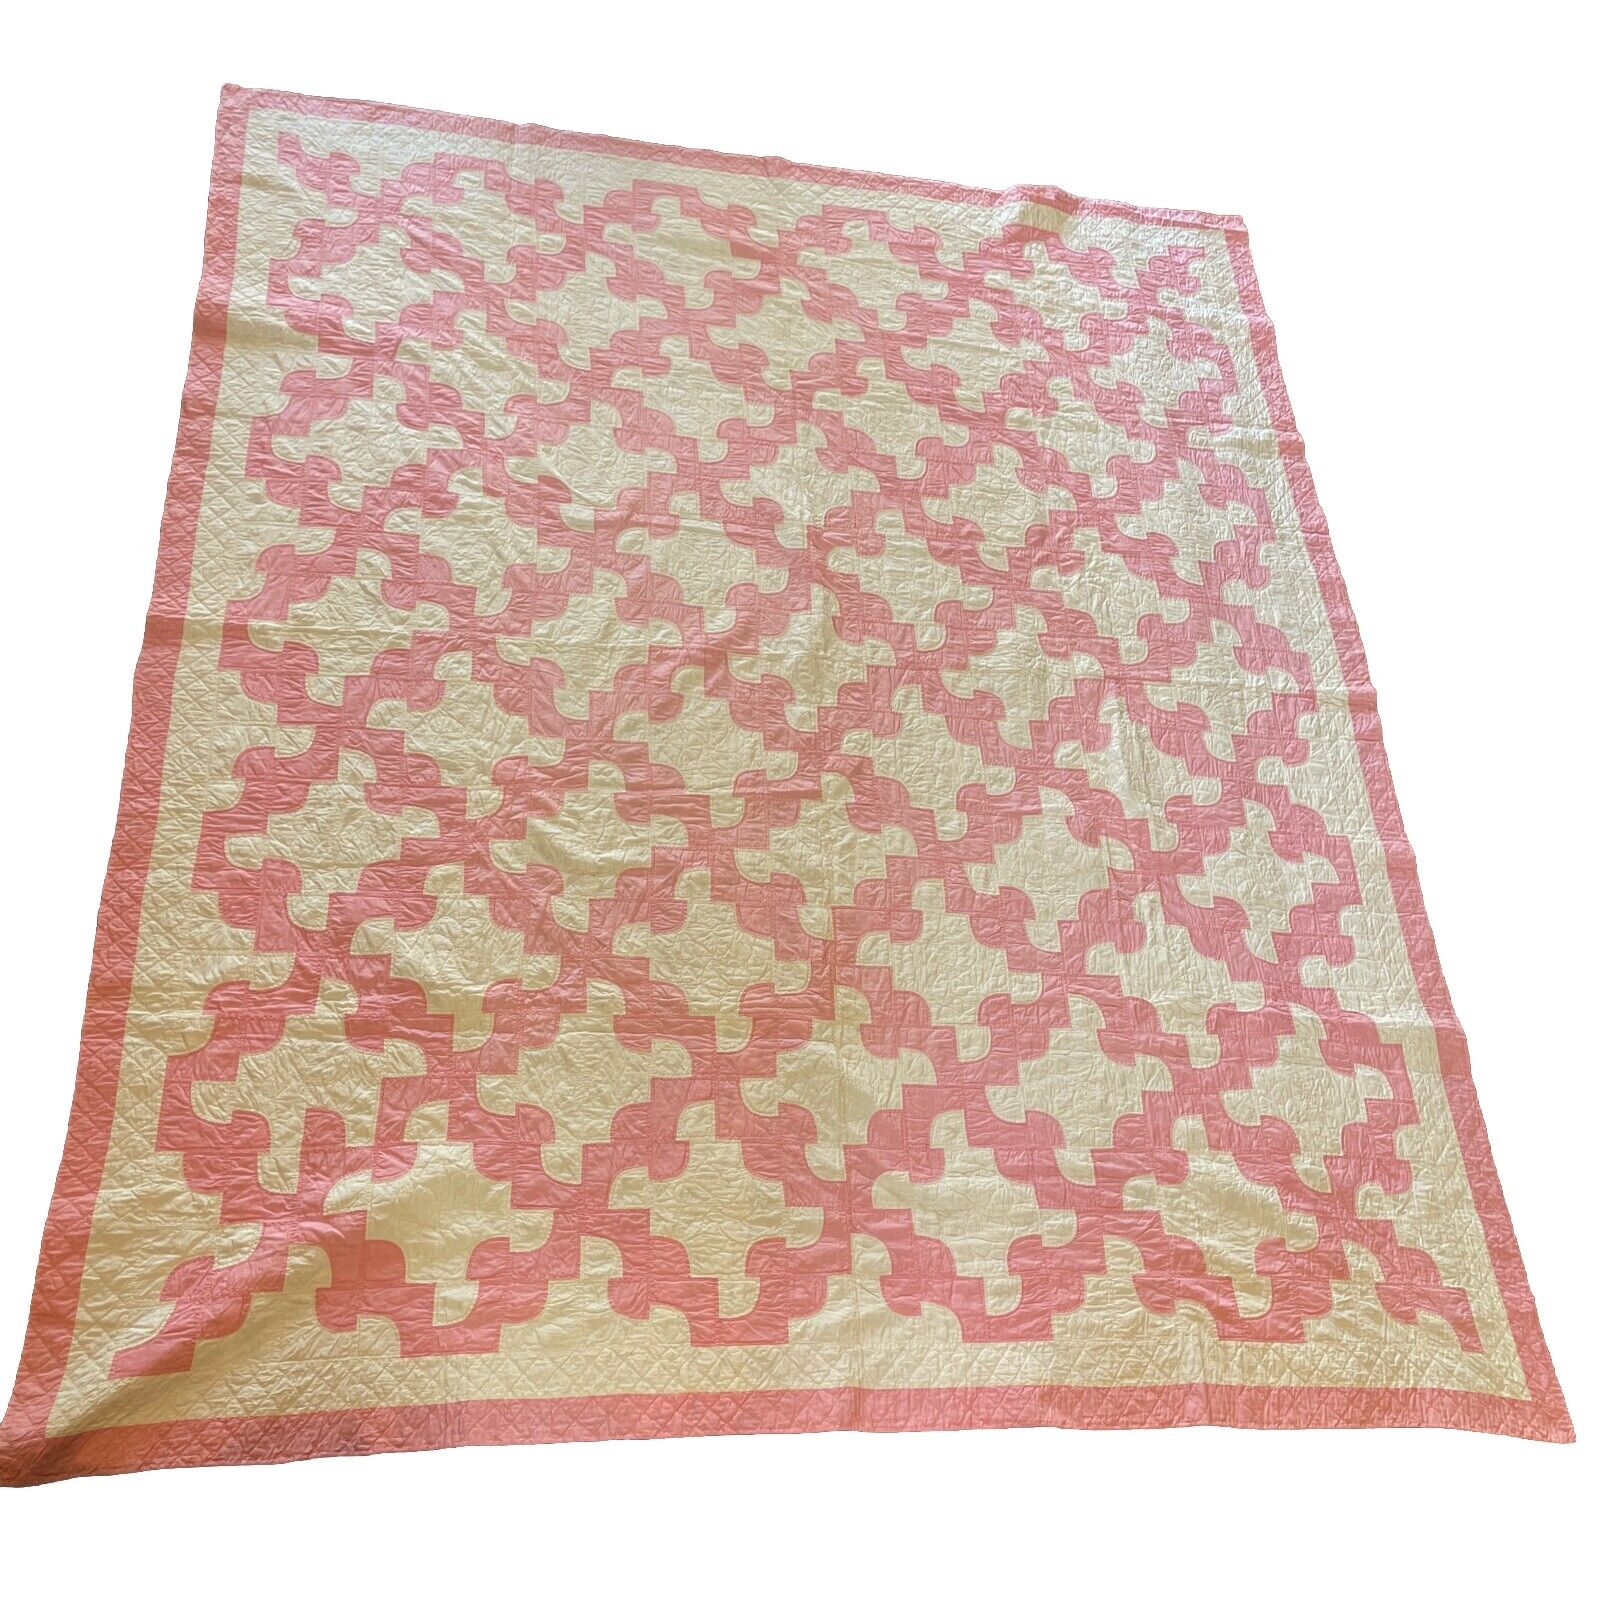 Antique Coverlet Pink White Drunkard\'s Path Patchwork Hand Sewn Quilt 1920’s